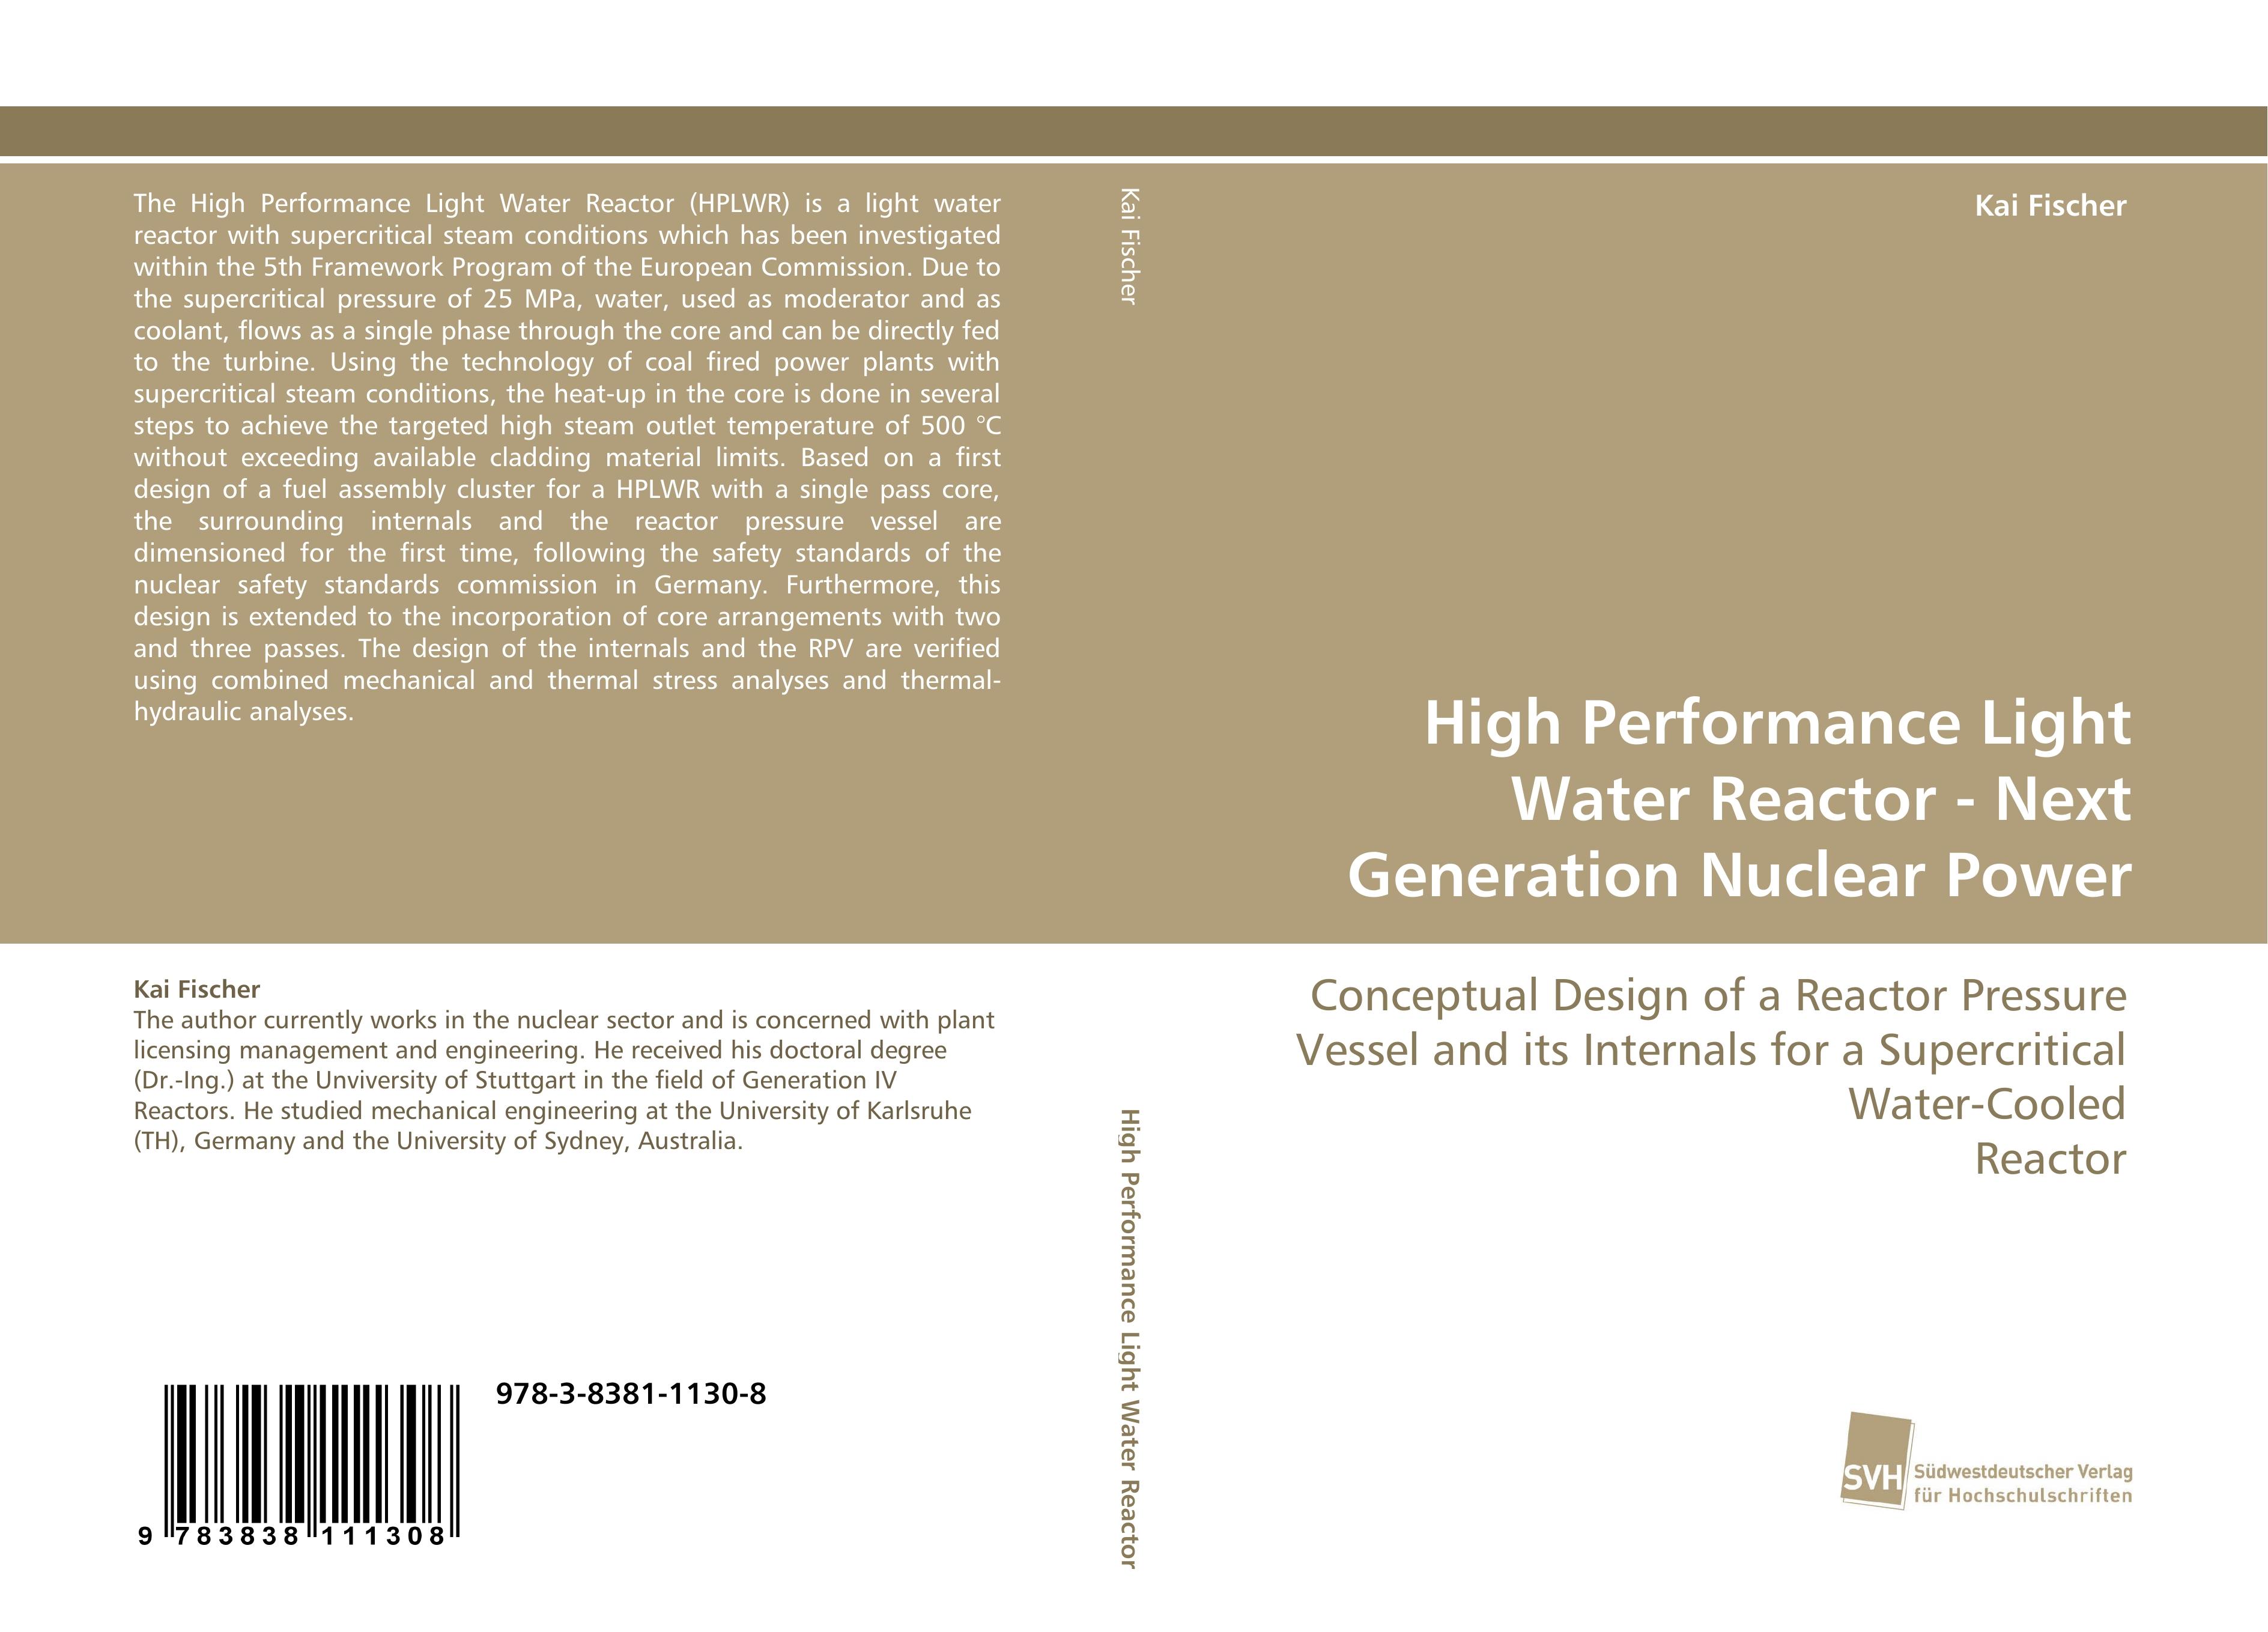 High Performance Light Water Reactor - Next Generation Nuclear Power / Conceptual Design of a Reactor Pressure Vessel and its Internals for a Supercritical Water-Cooled Reactor / Kai Fischer / Buch - Fischer, Kai